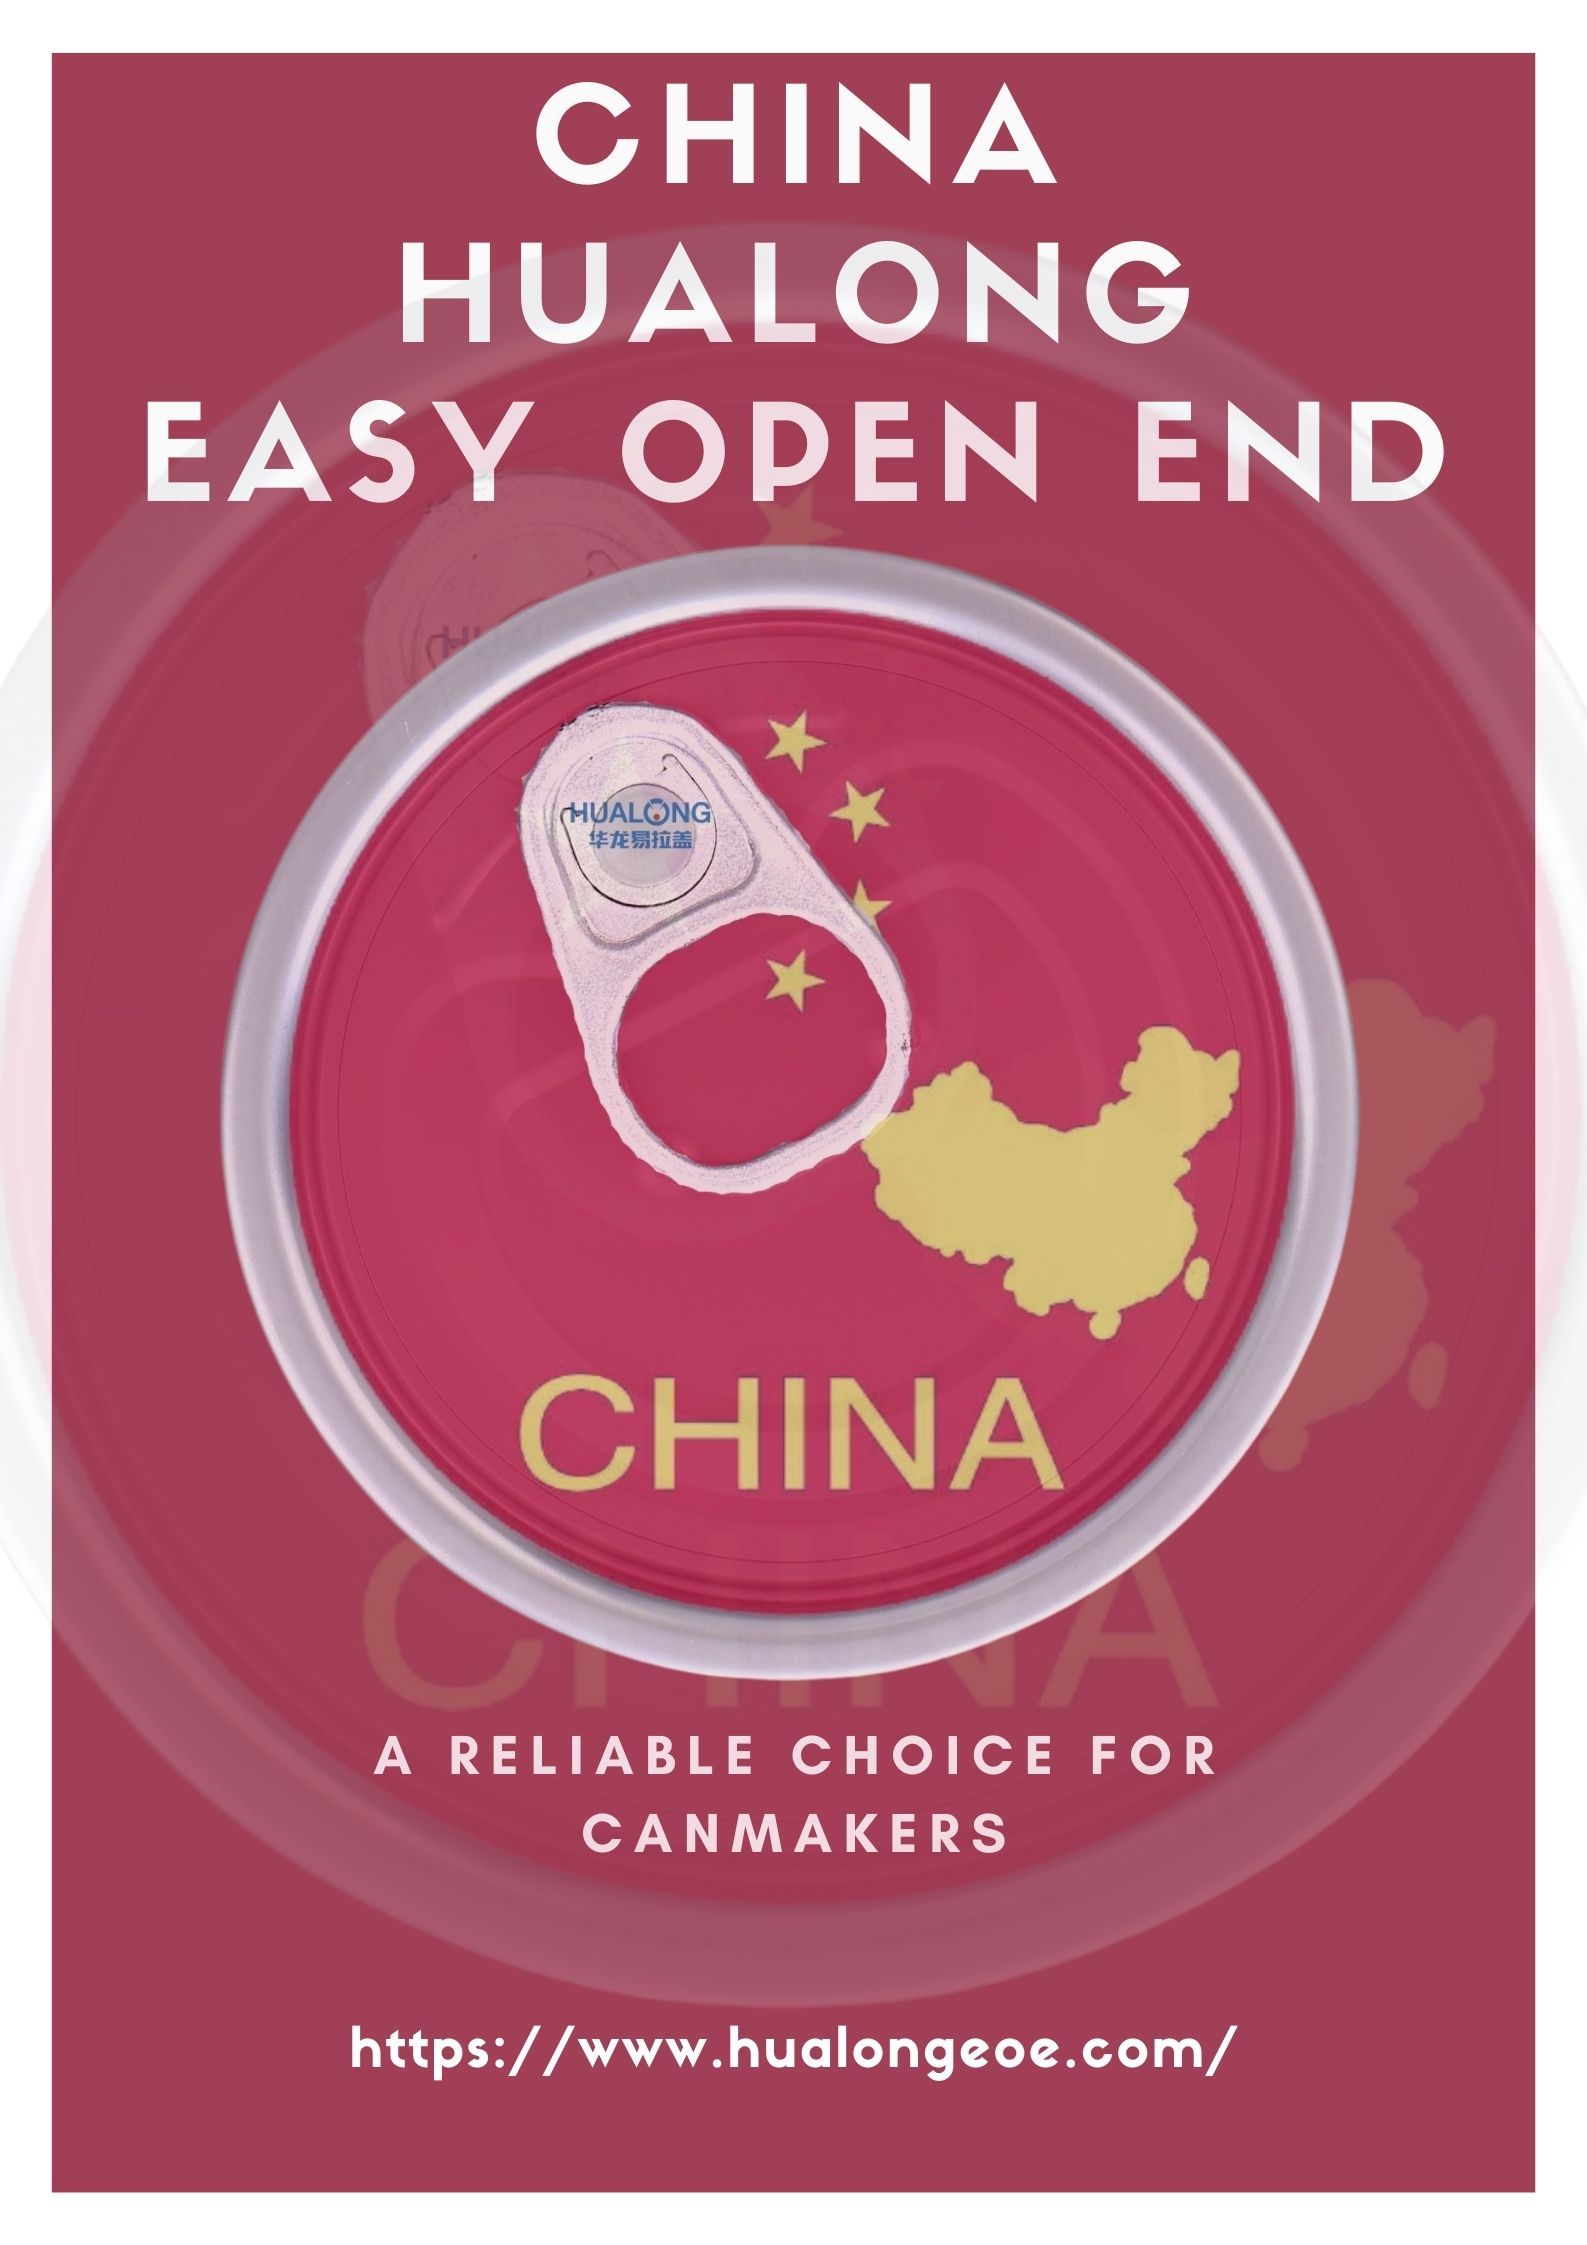 Hualong Easy Open End: אַ פאַרלאָזלעך ברירה פֿאַר קאַנמאַקערס